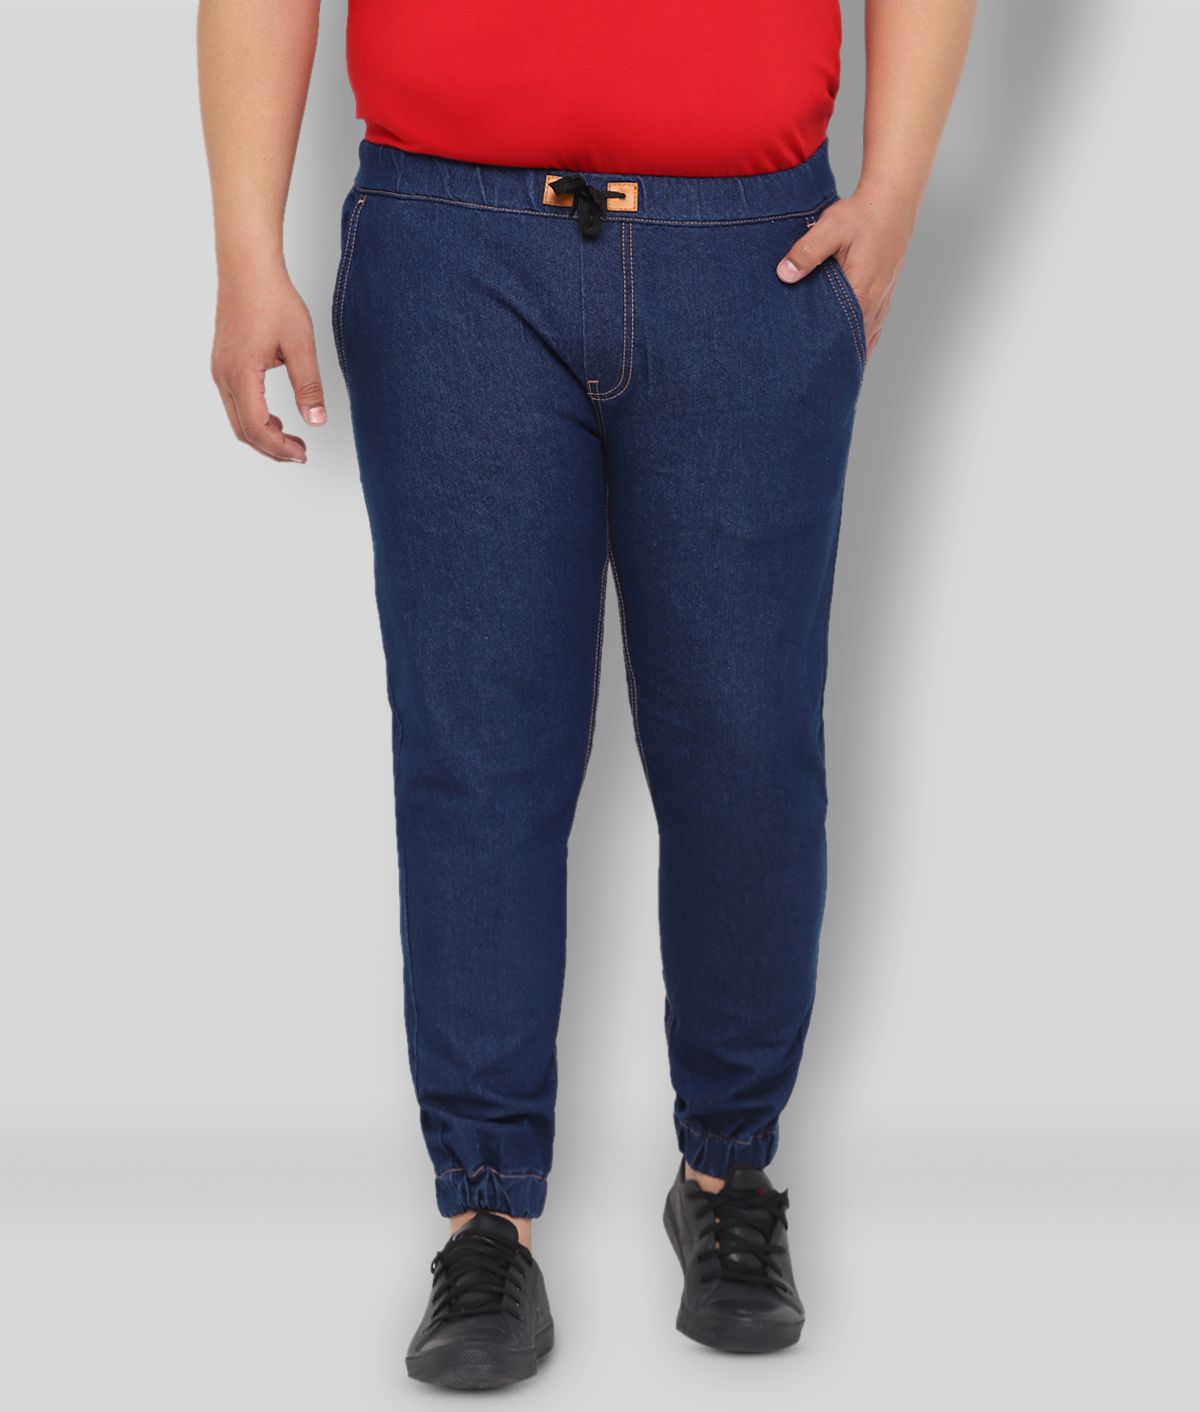 Urbano Plus - Dark Blue Cotton Blend Regular Fit Men's Jeans ( Pack of 1 )